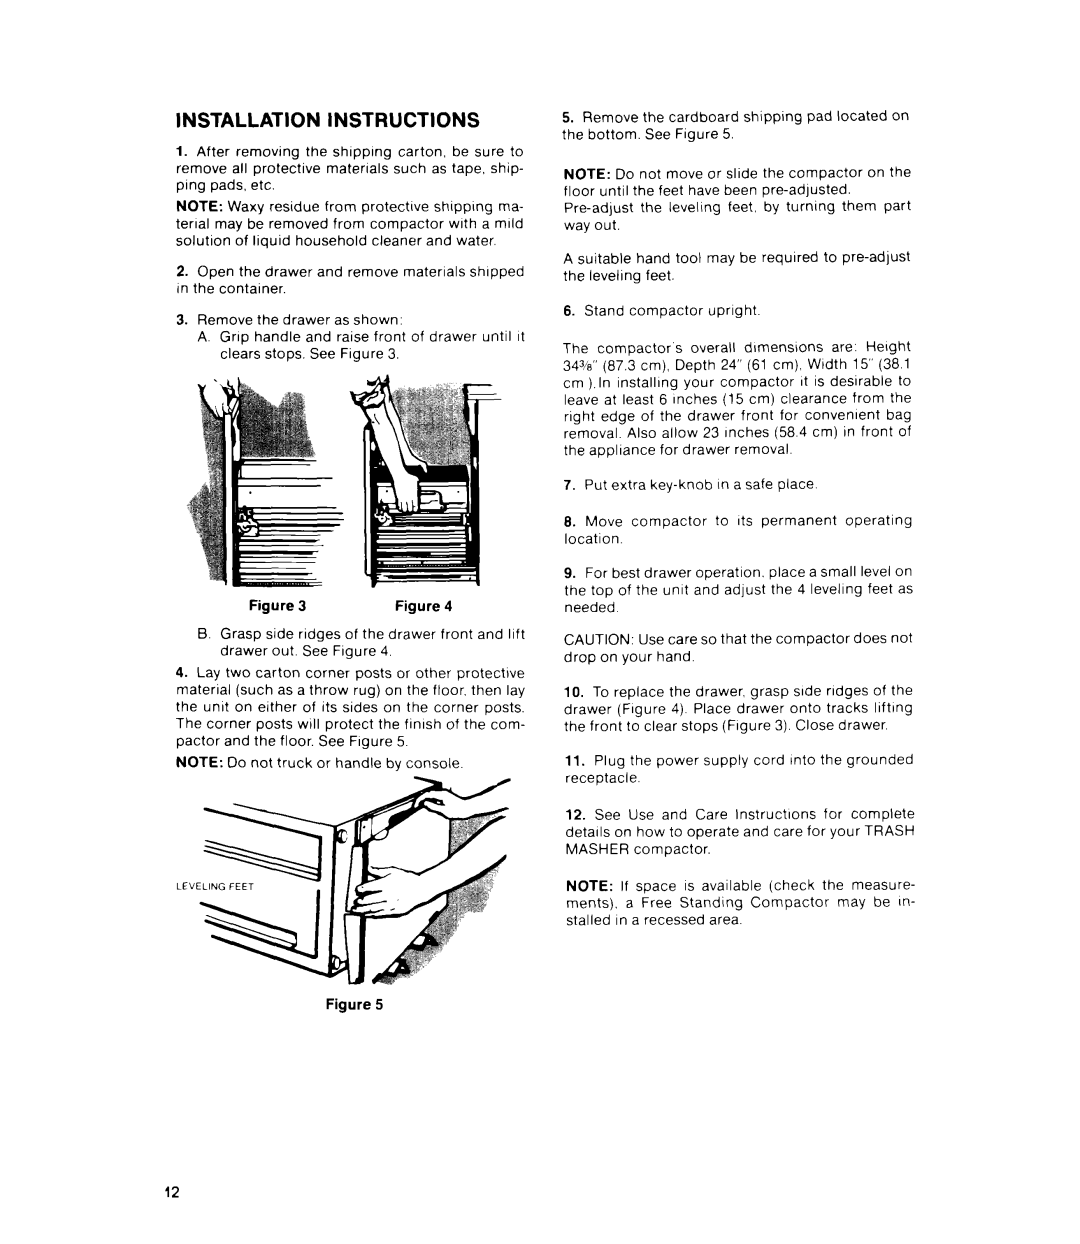 Whirlpool TRASH MASHER, JTF8500XL, Trash Compactor, 403 manual Installation Instructions 